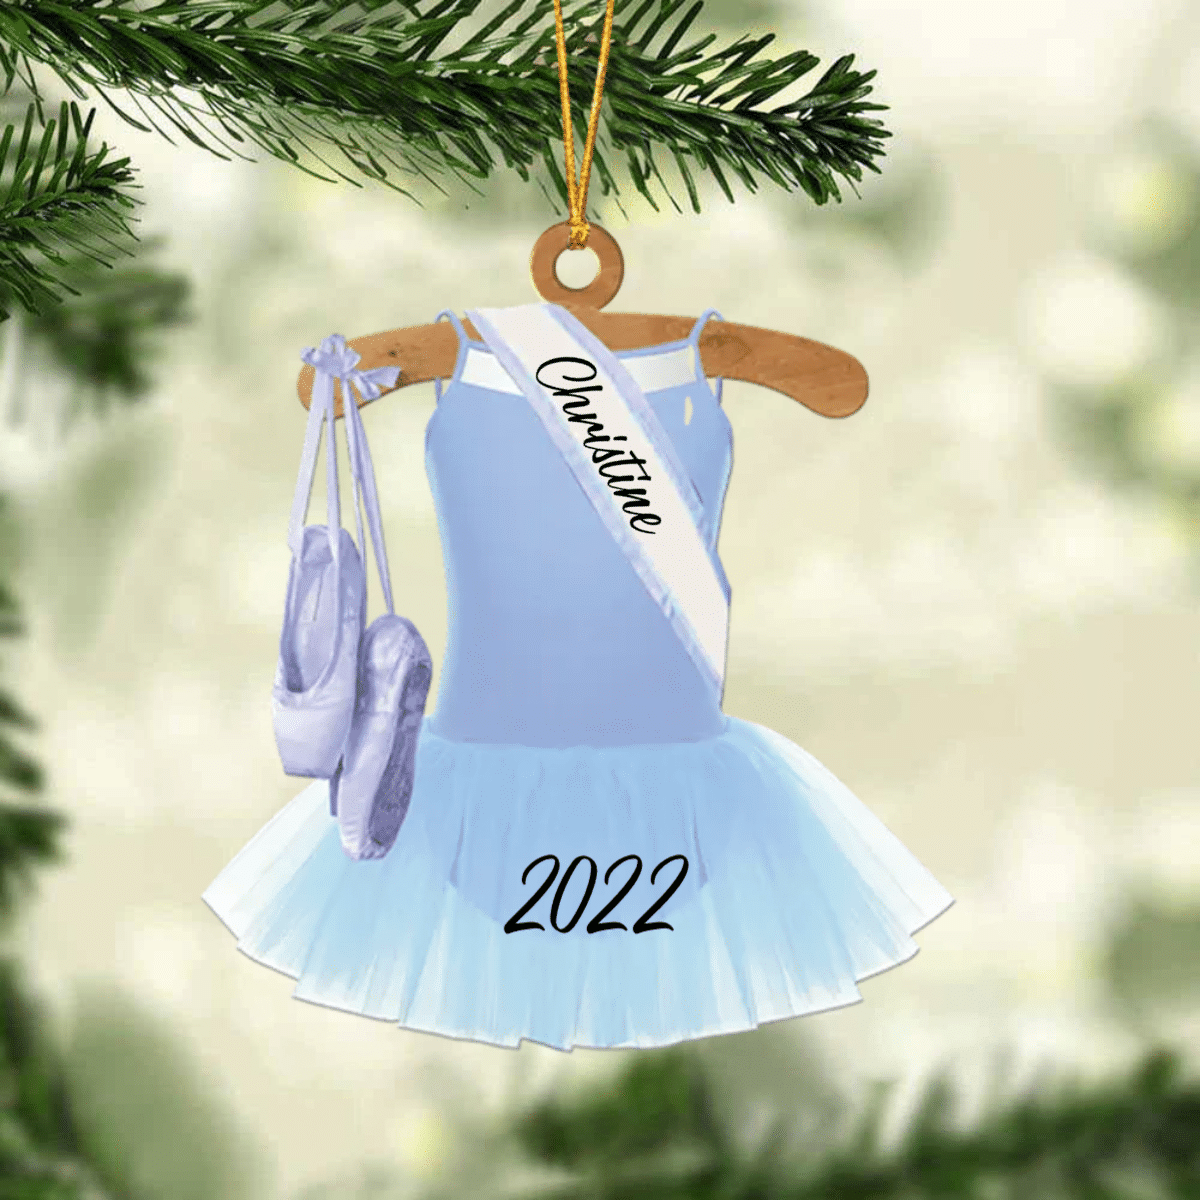 Ballet Dance Dress Christmas Ornament - Great Gift Idea For Ballet Lovers